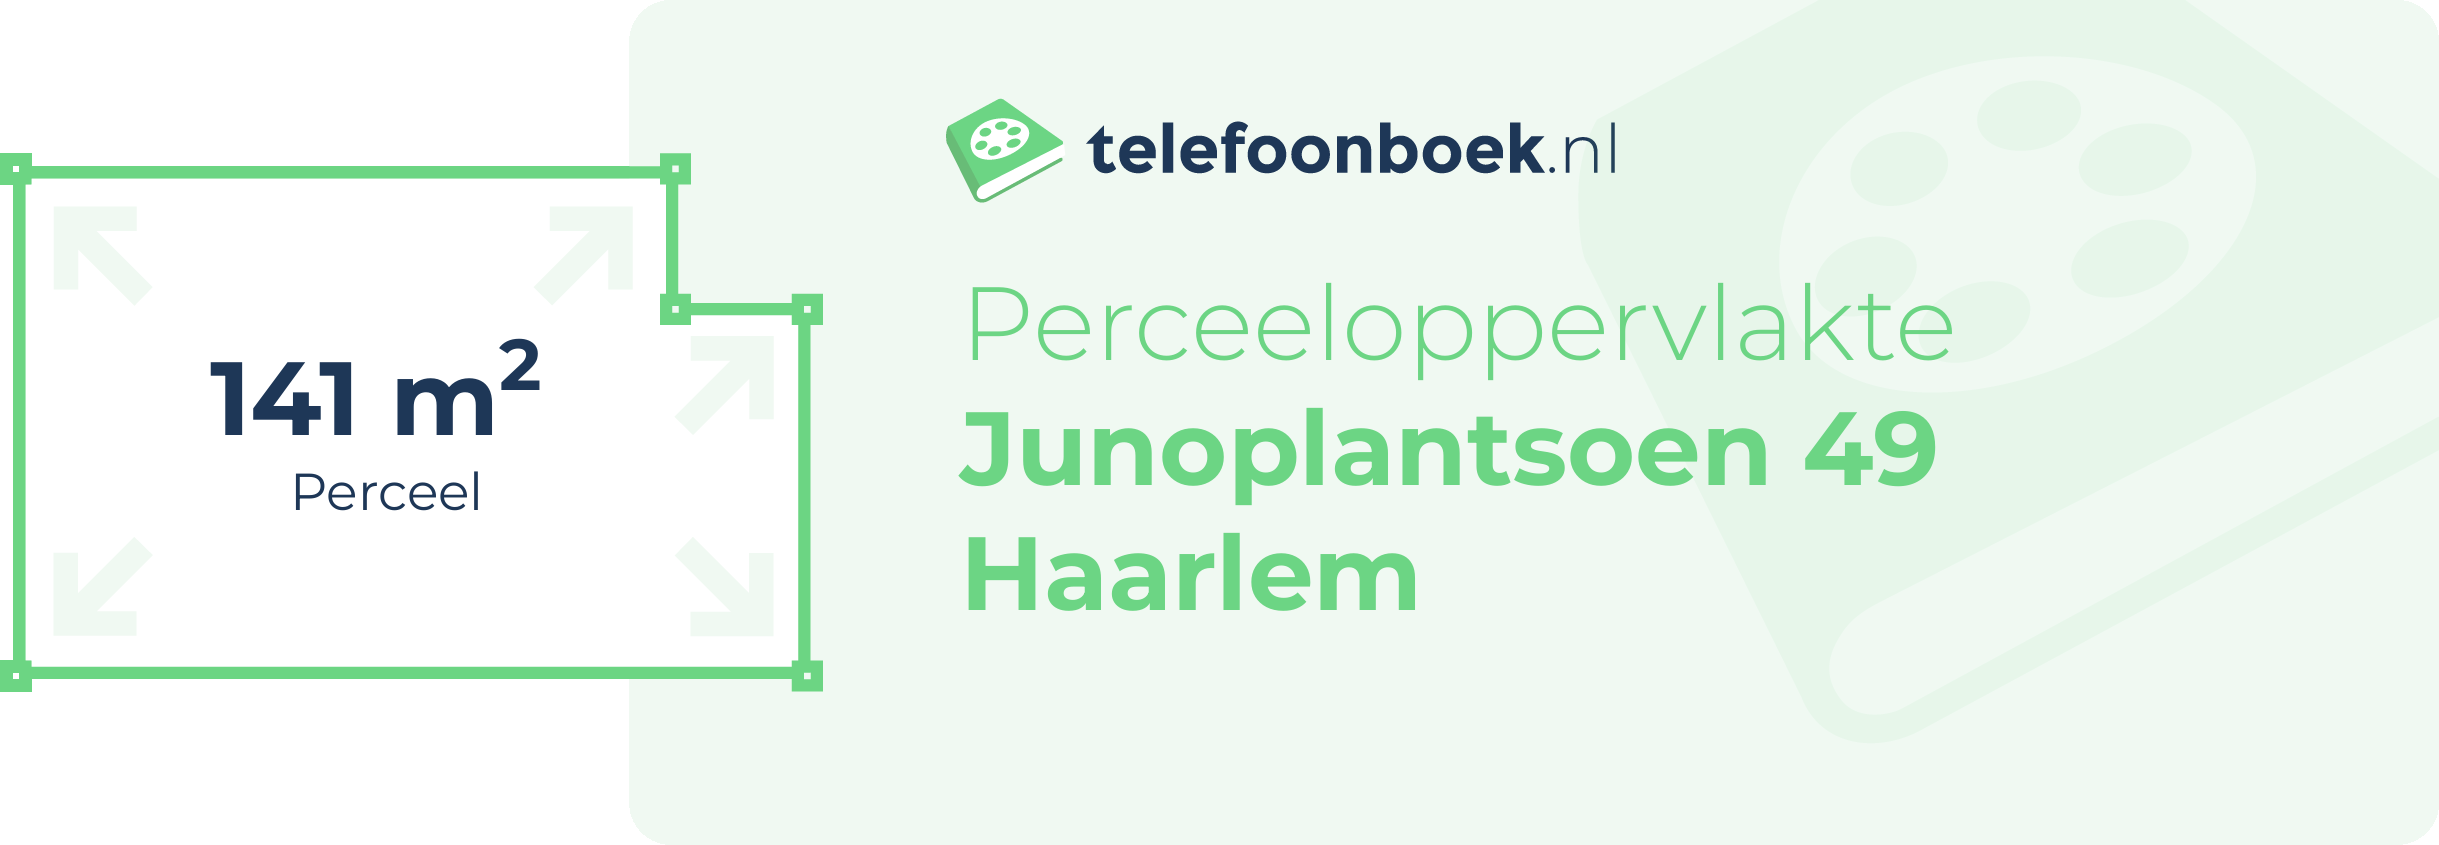 Perceeloppervlakte Junoplantsoen 49 Haarlem